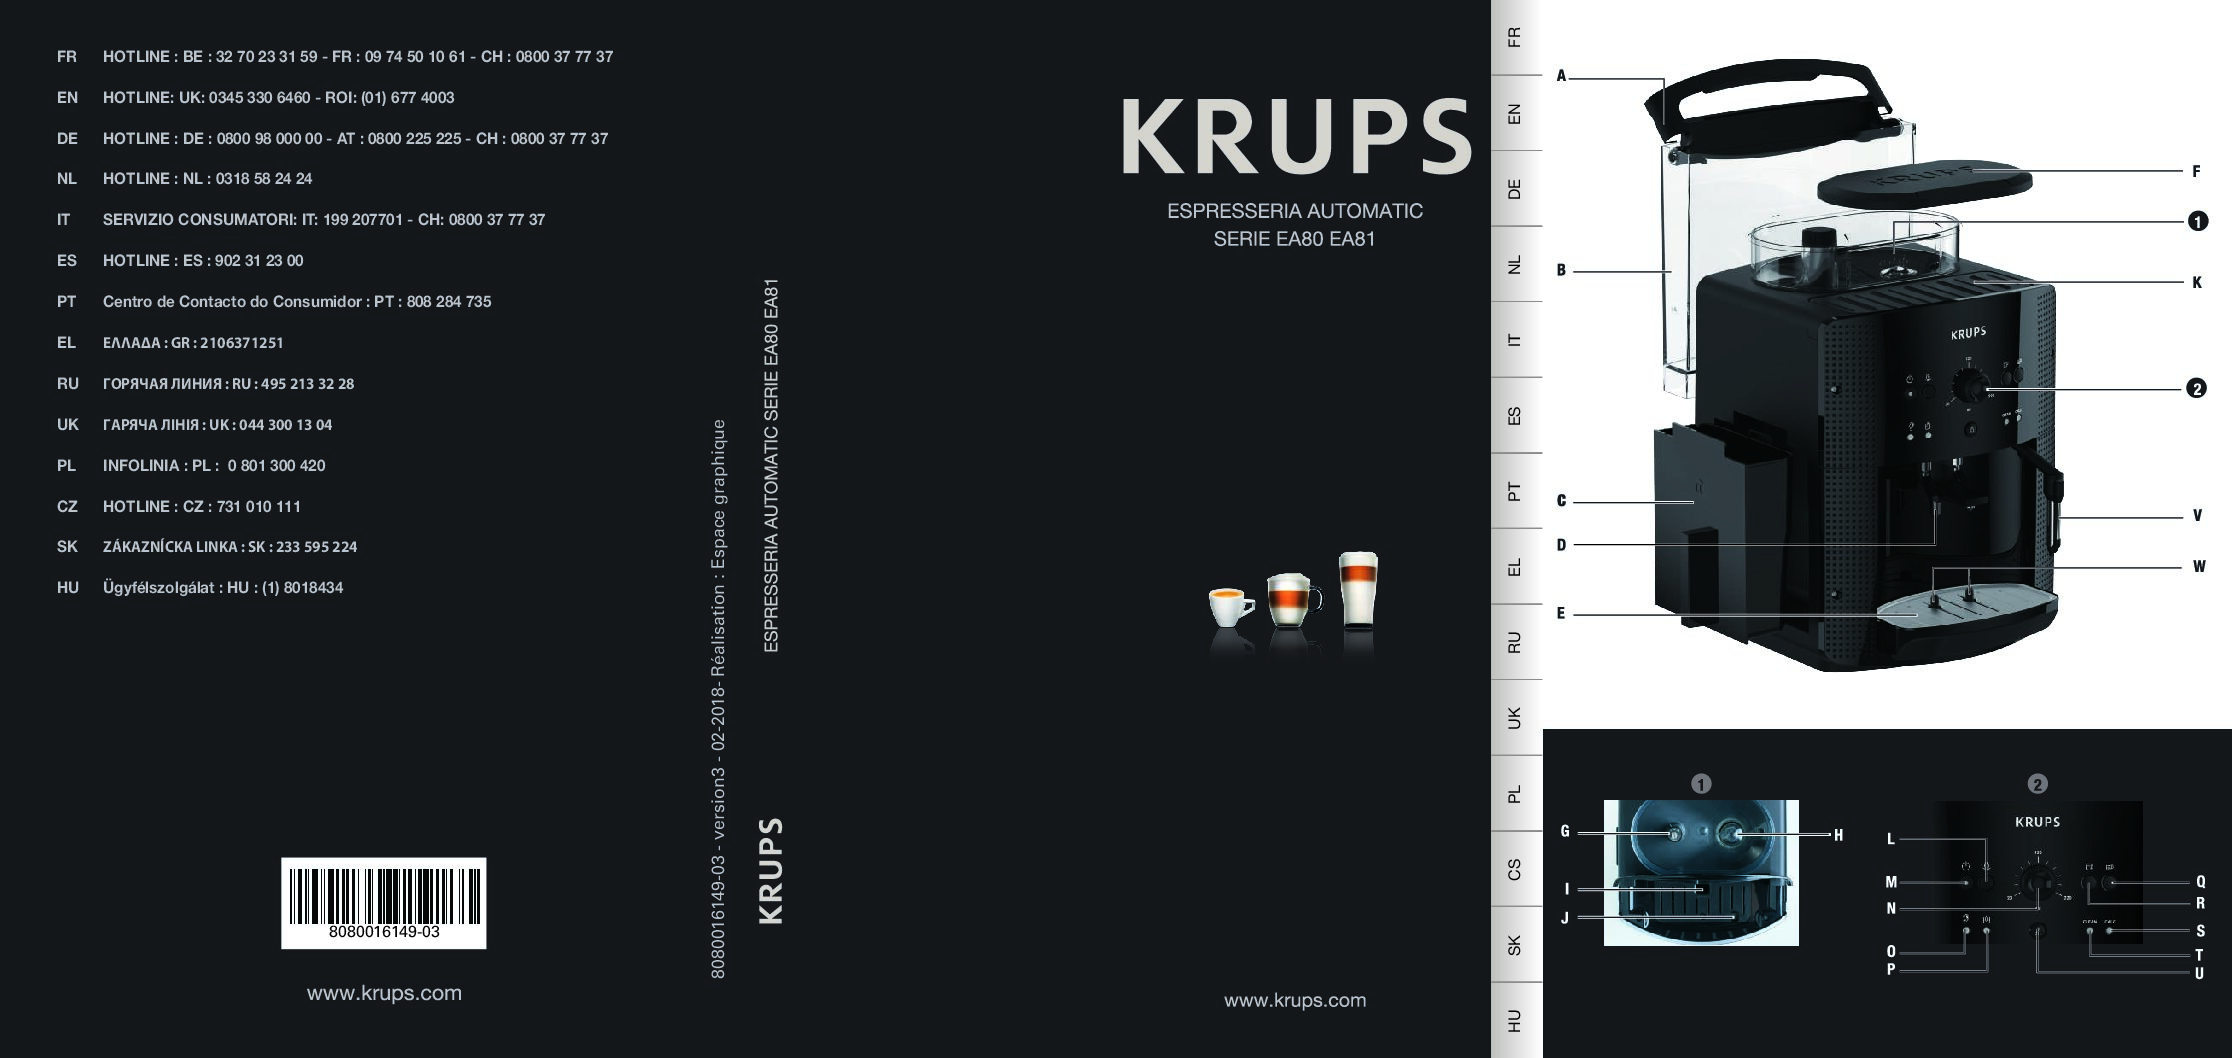 Krups EA81 serie - ESPRESSERIA AUTOMATIC Bedienungsanleitung